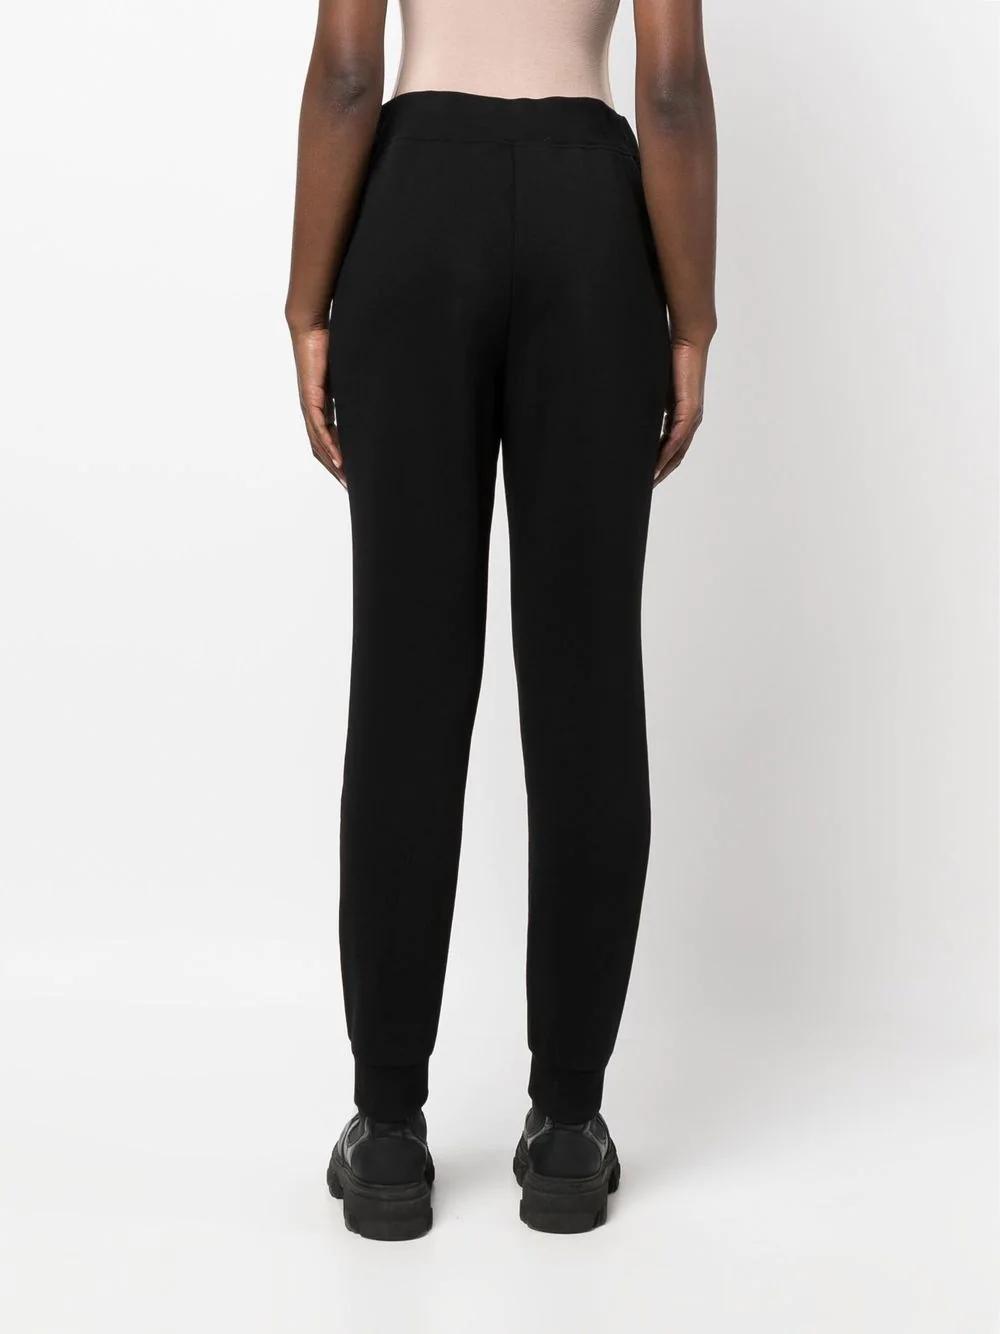 Pantalones Karl Lagerfeld negros monogram rhinesto